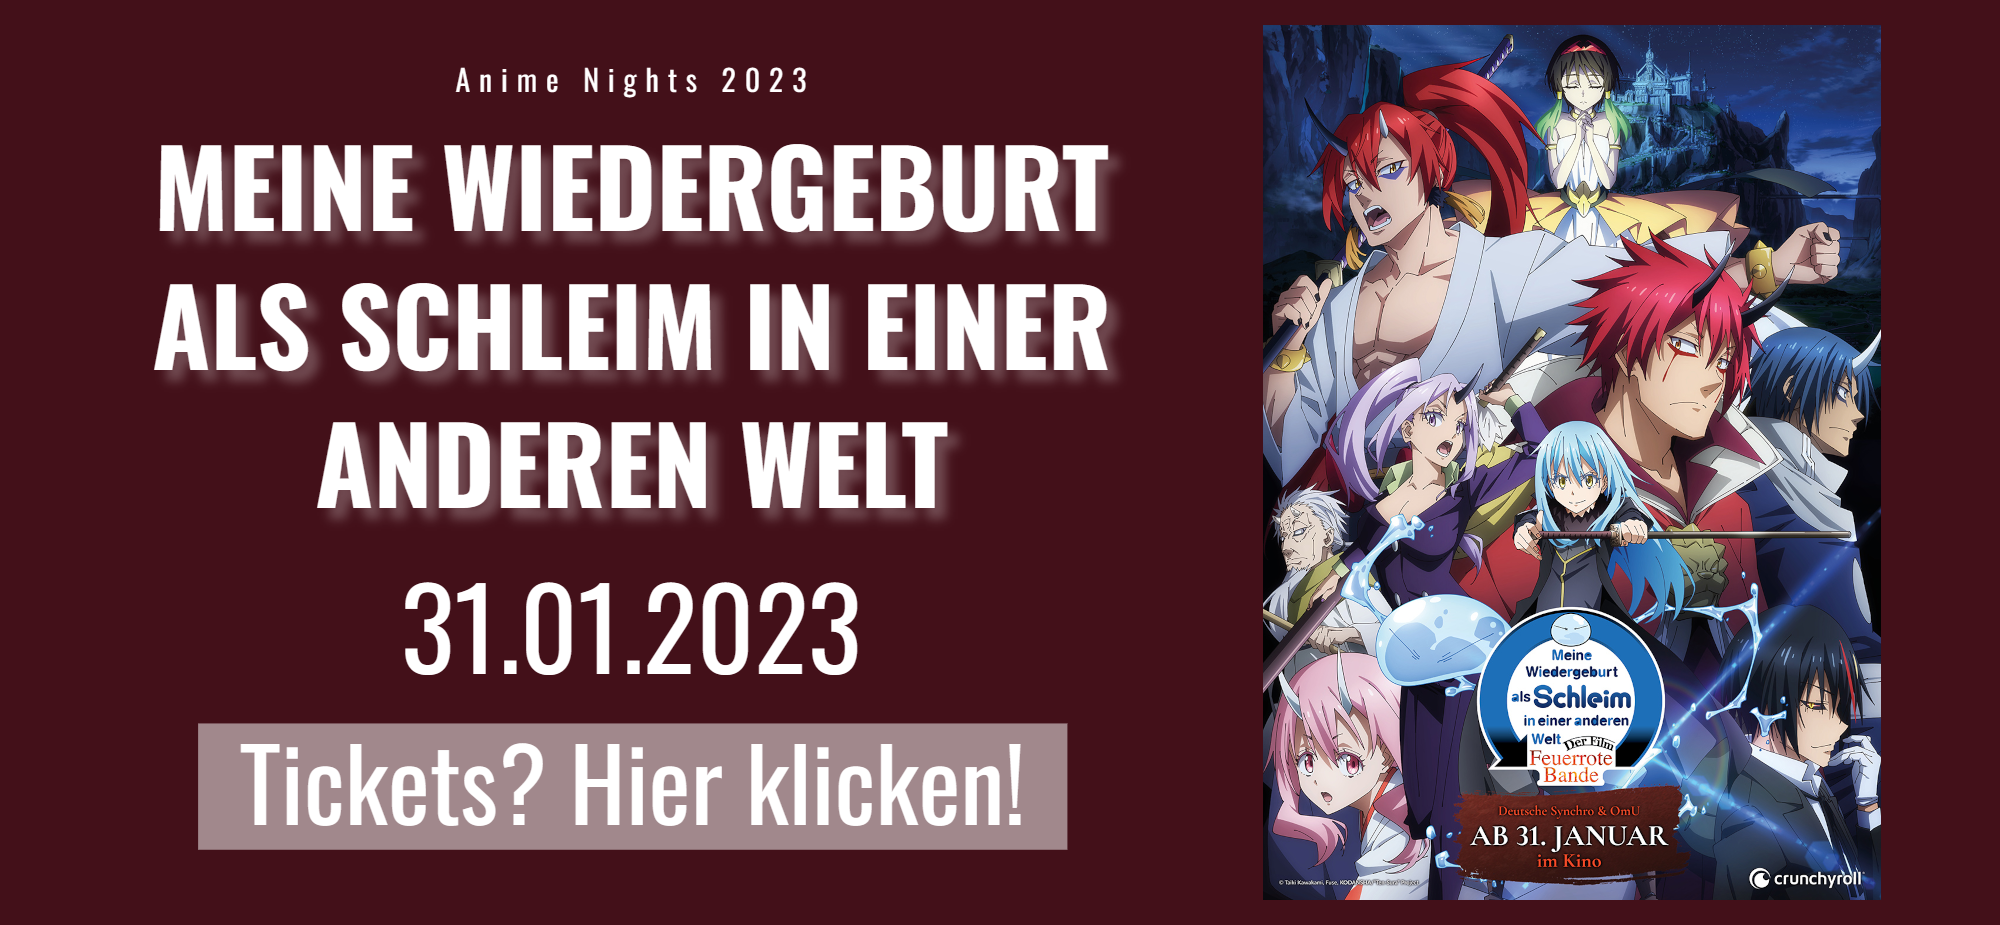 Anime Nights 2023 - Januar